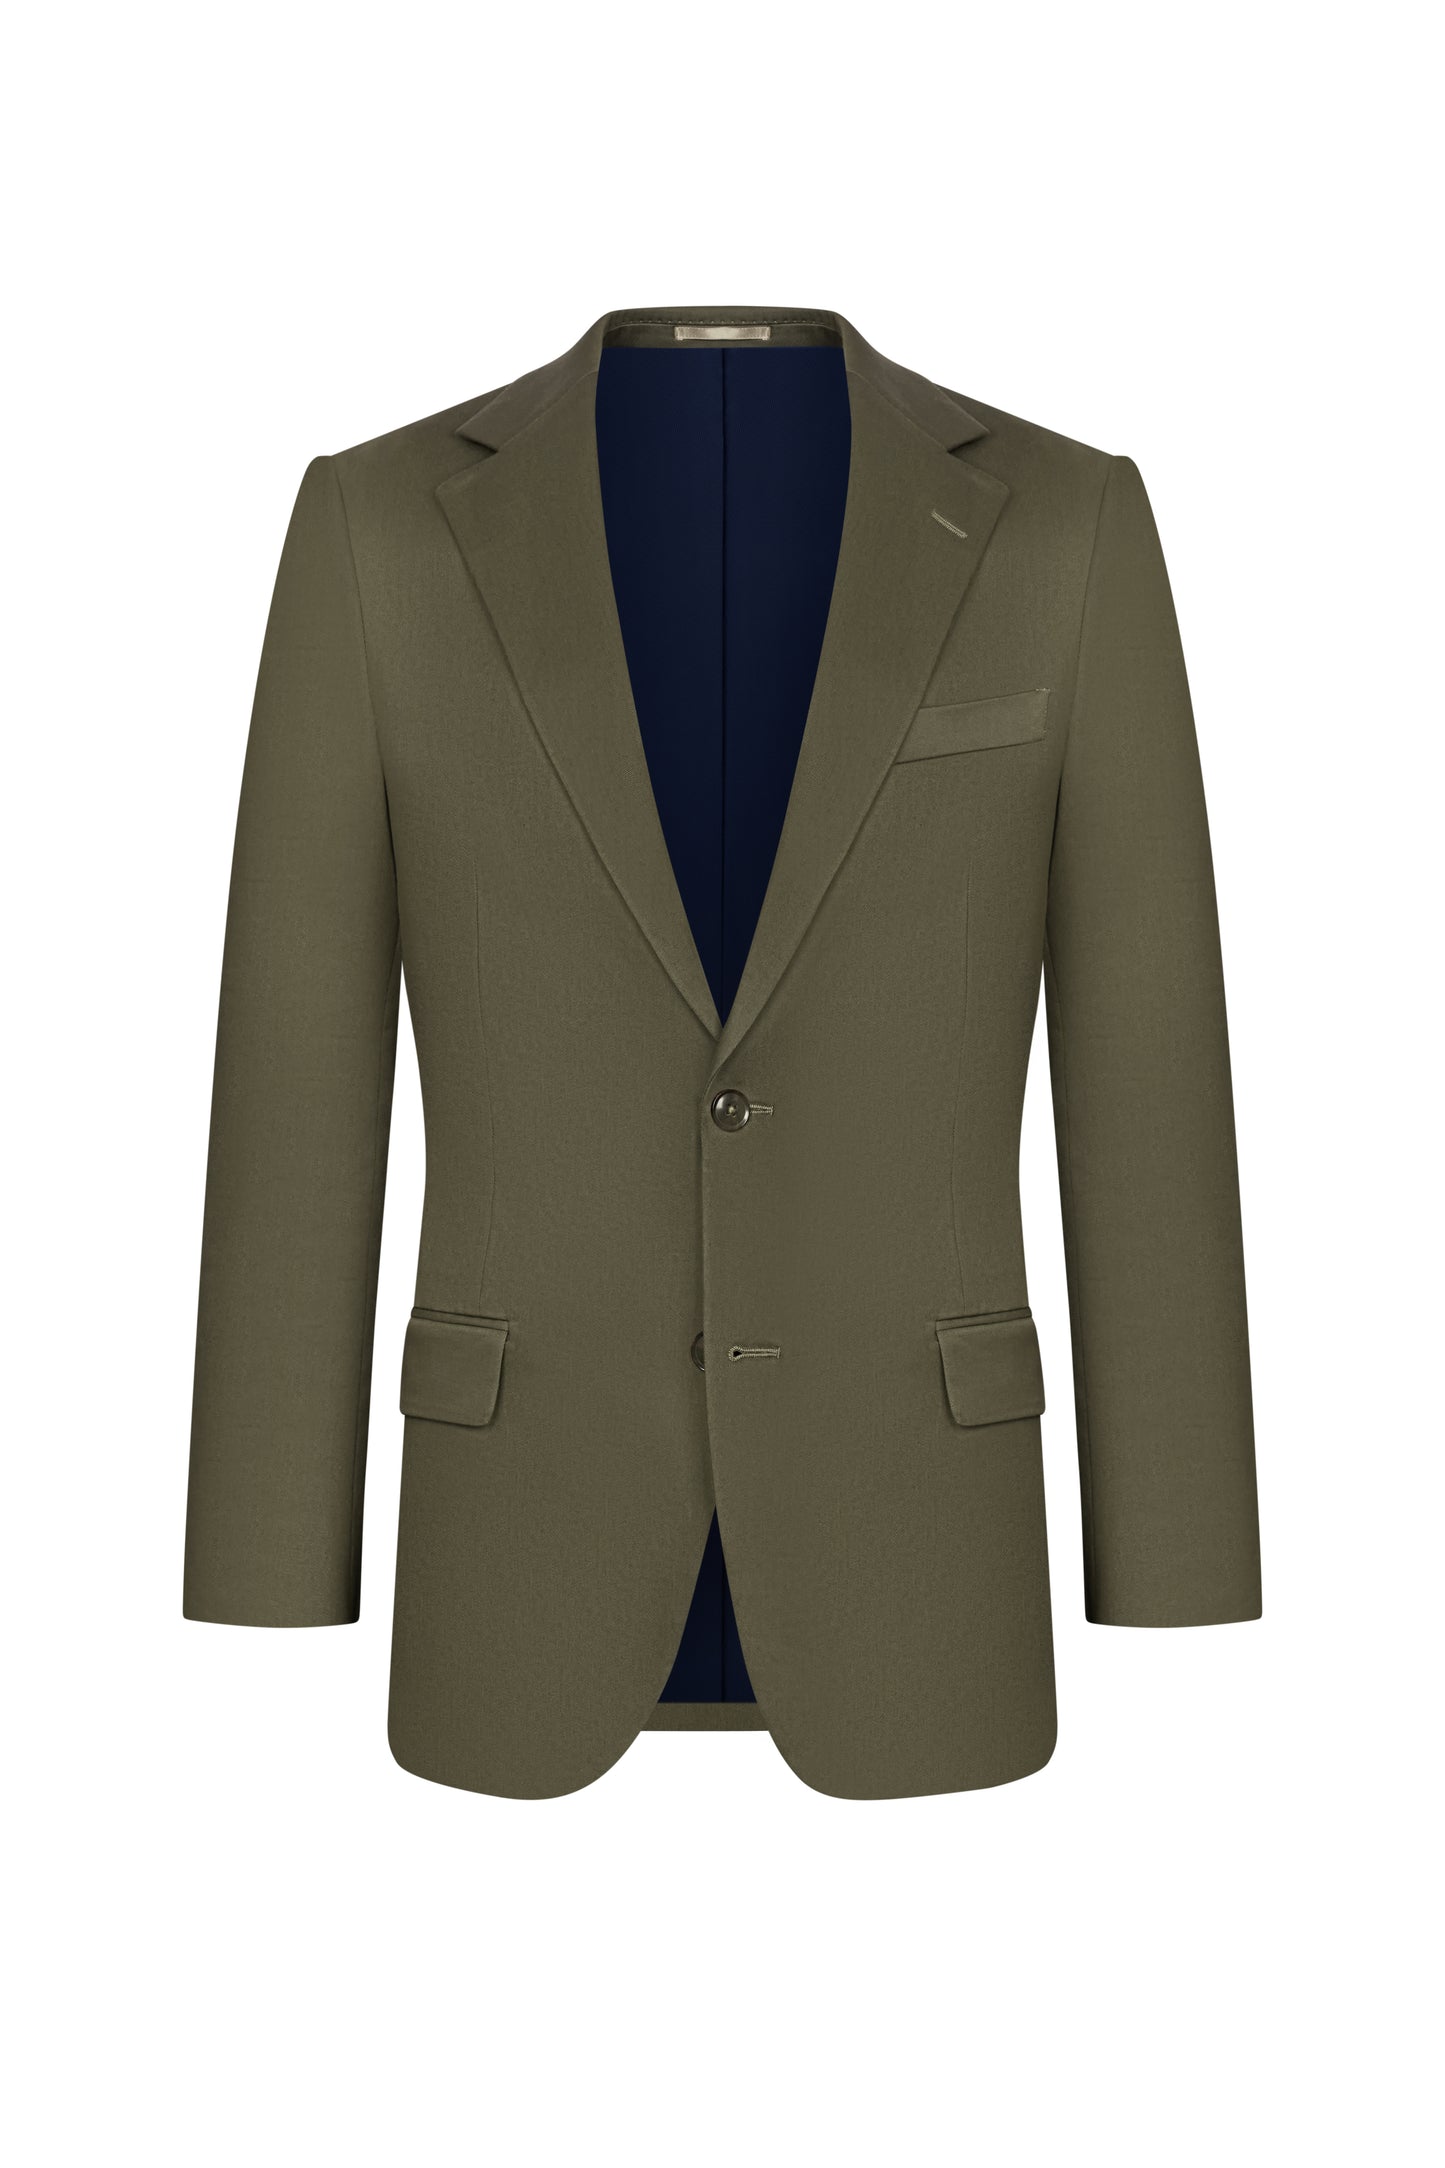 Holland & Sherry Dark Olive Twill Cotton Custom Suit